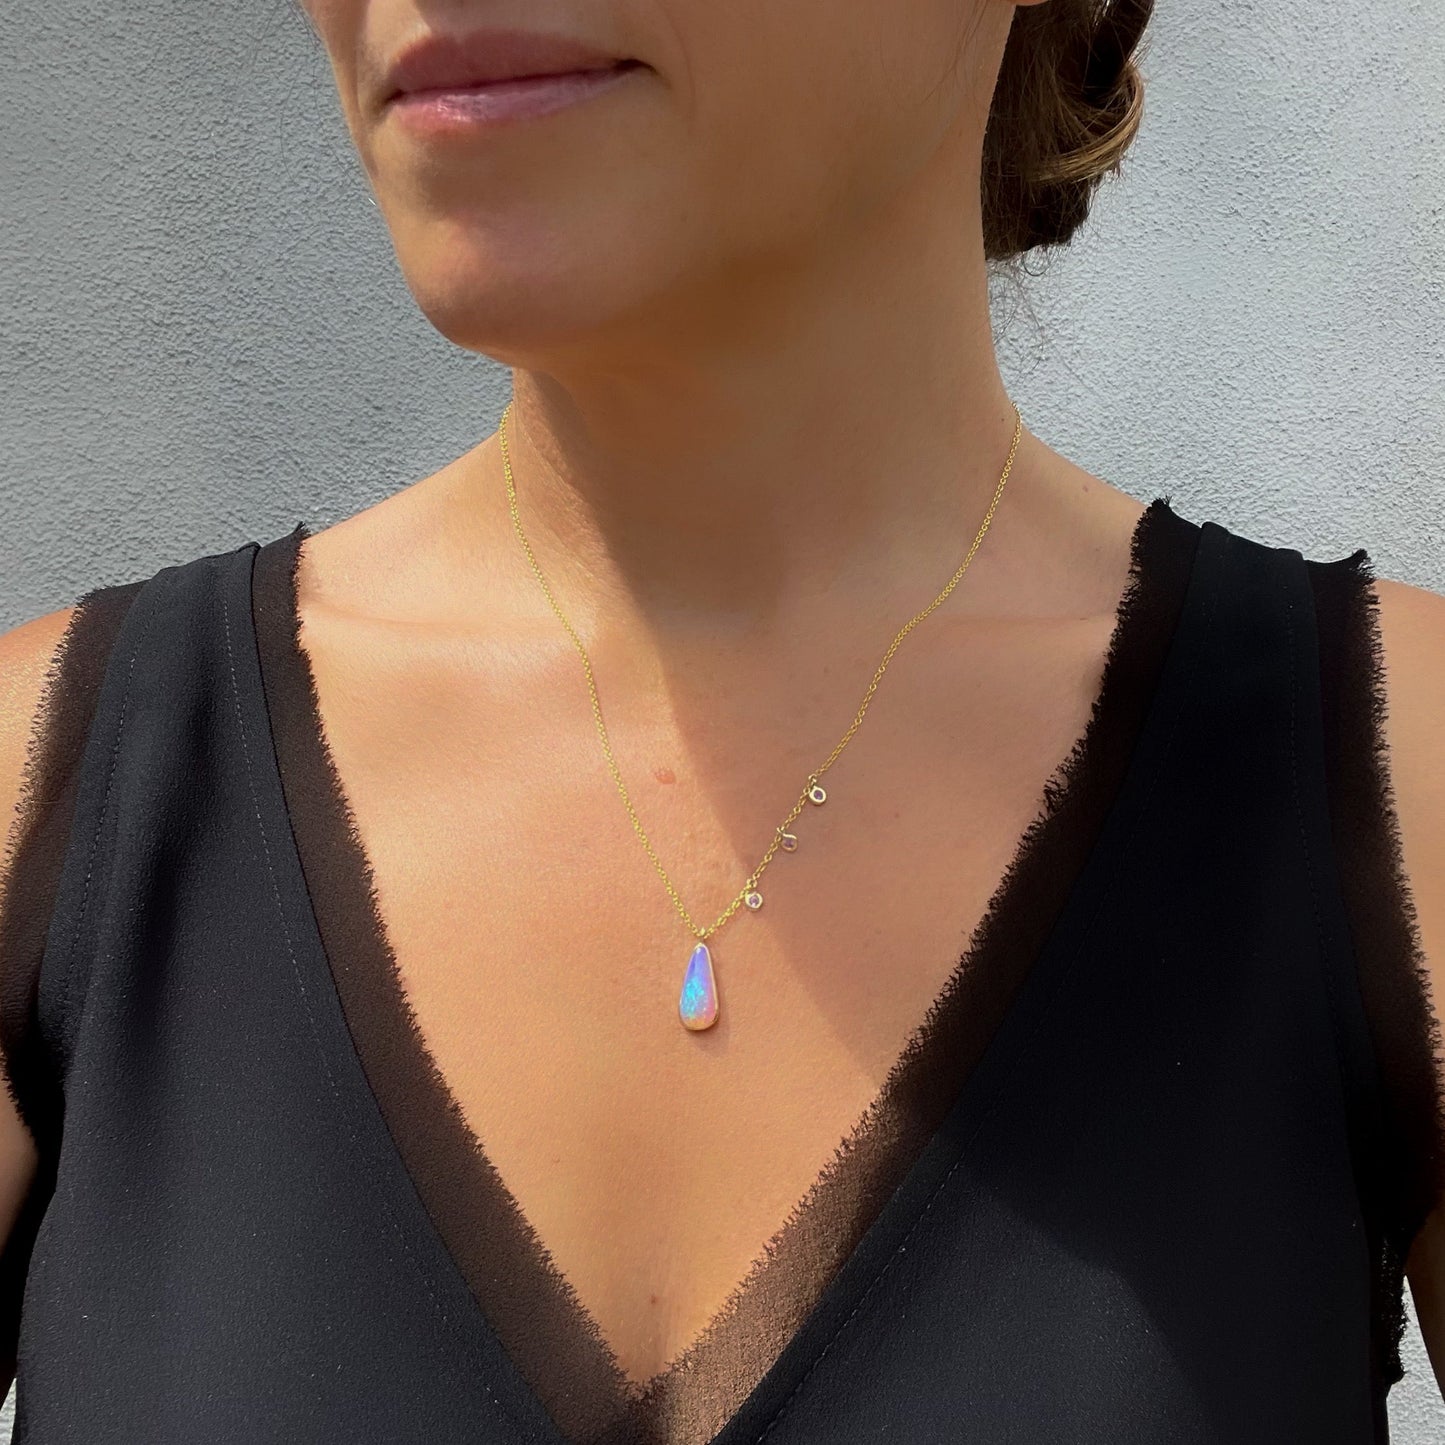 Australian Opal Necklace by NIXIN Jewelry on model. Australian opal jewelry.